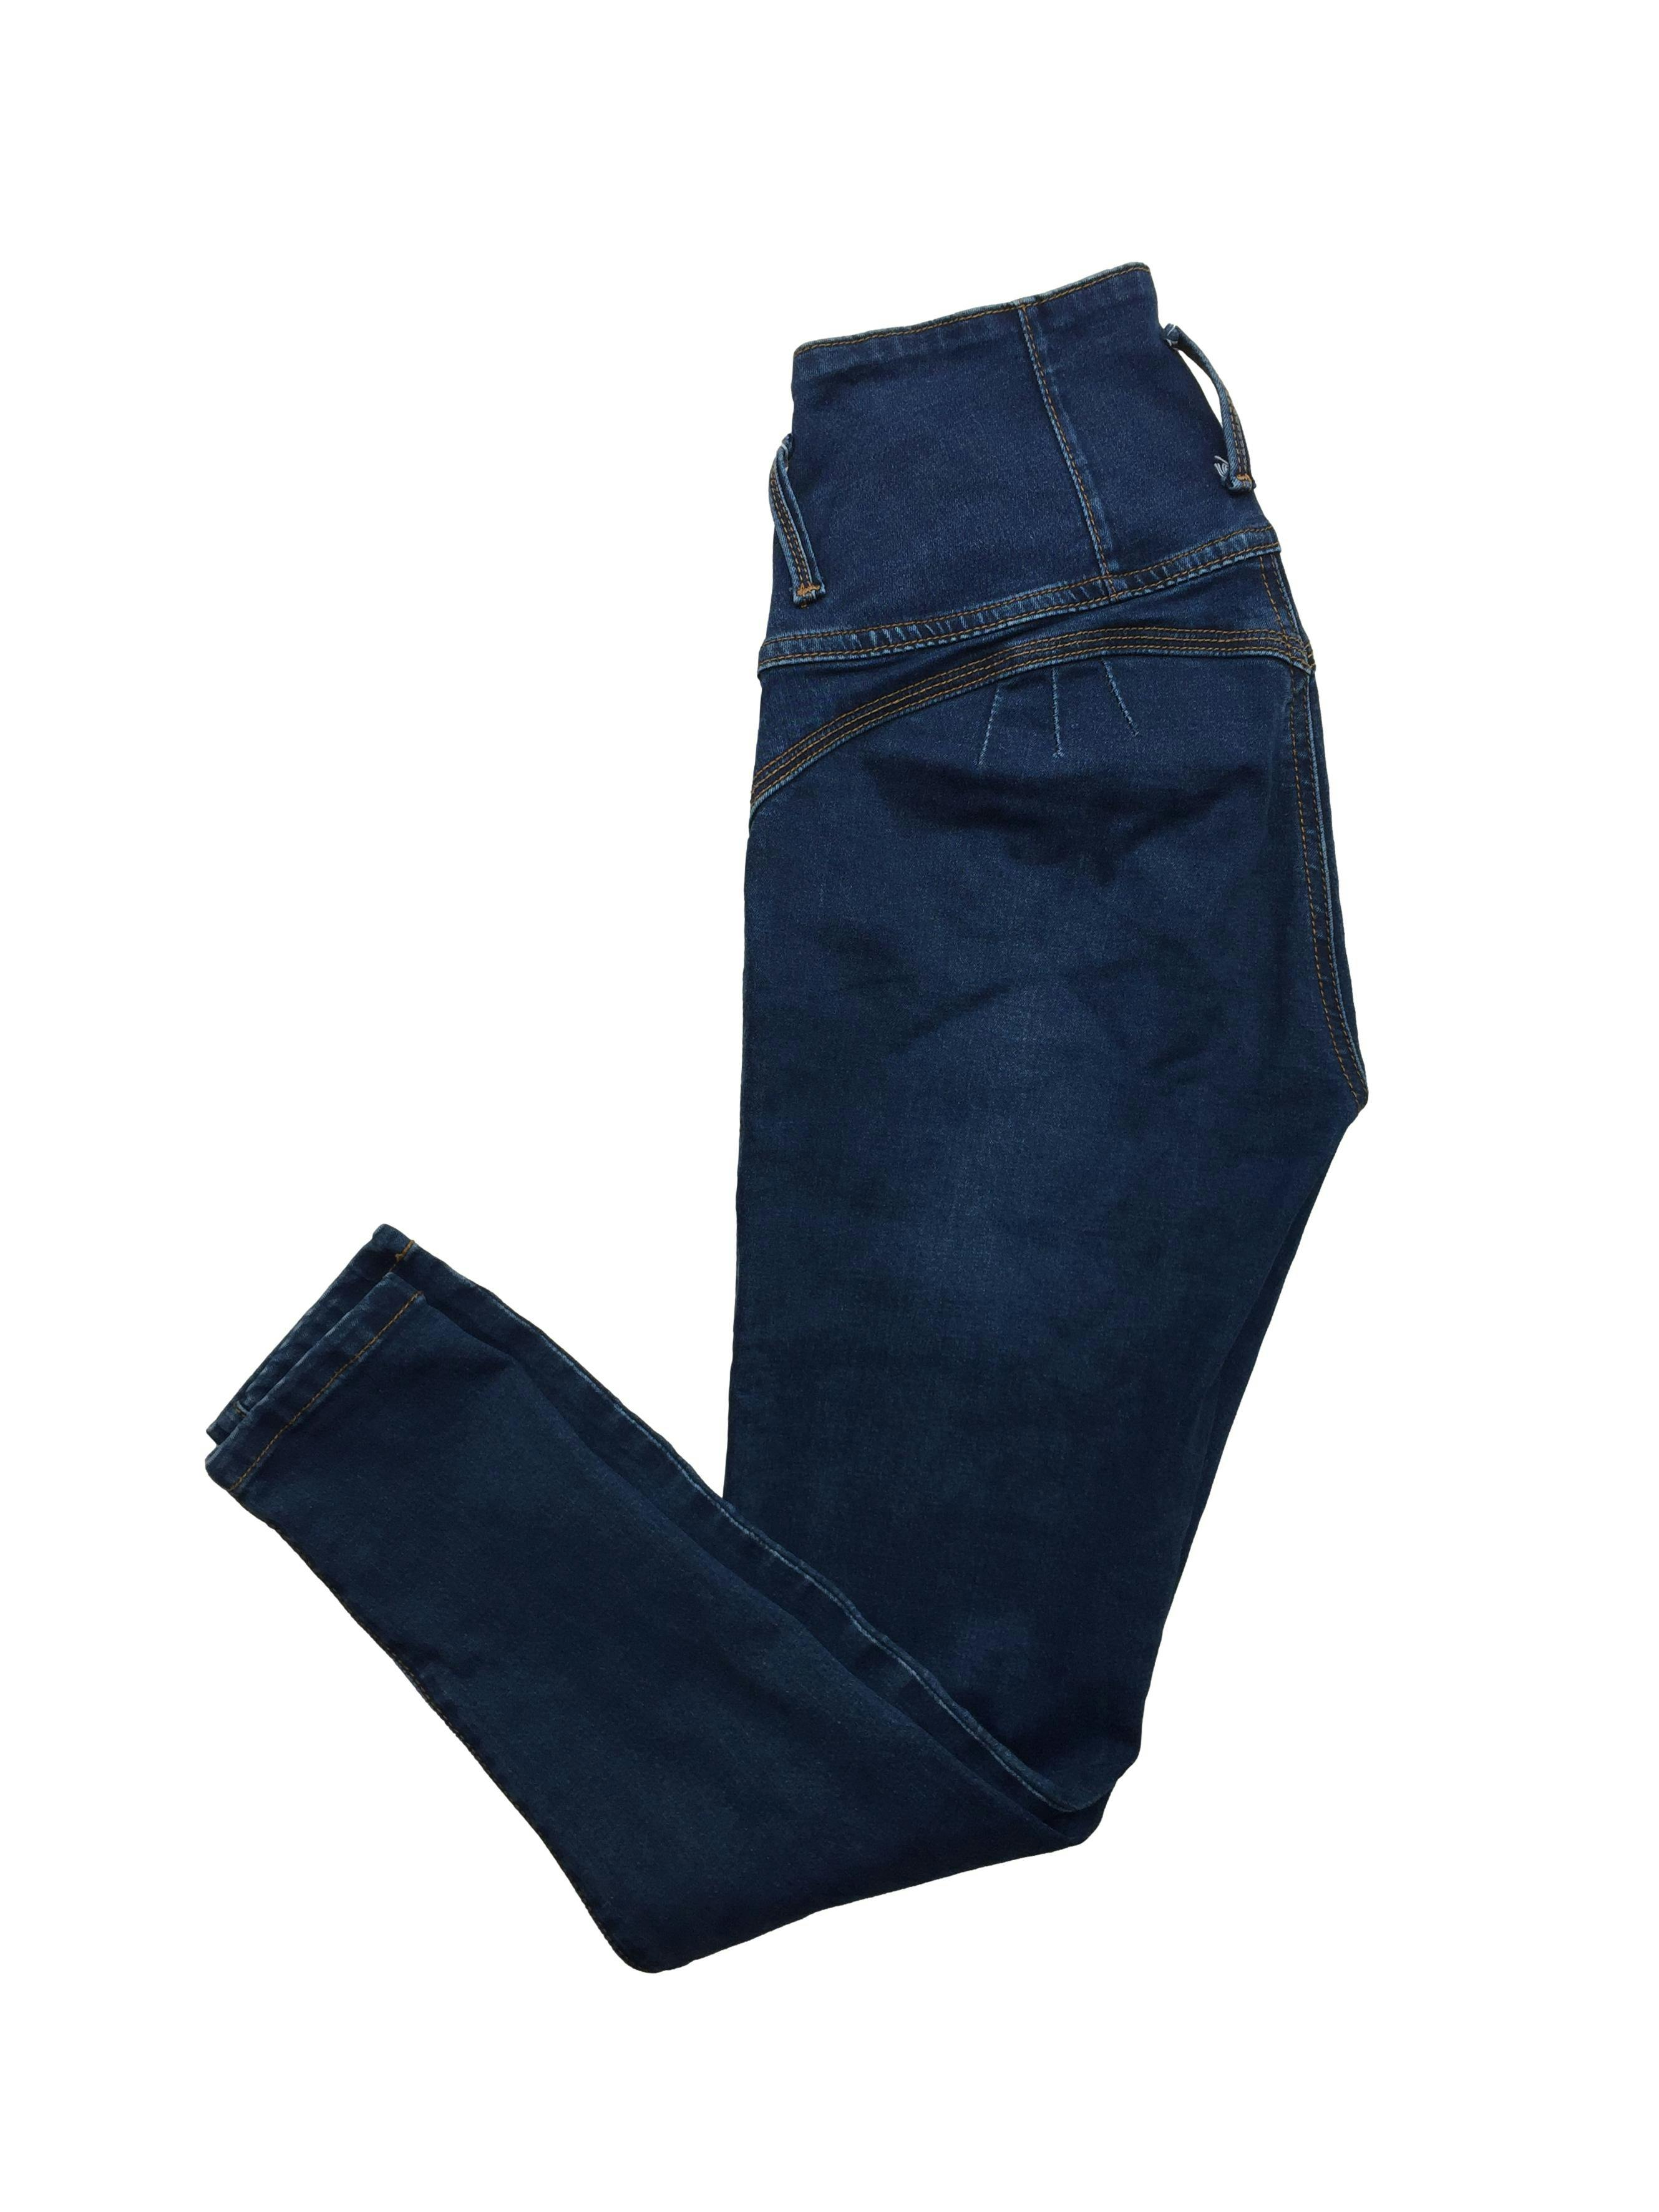 Skinny jean azul de tiro alto, pretina ancha y falsos bolsillos. Cintura 70cm, Largo 90cm.